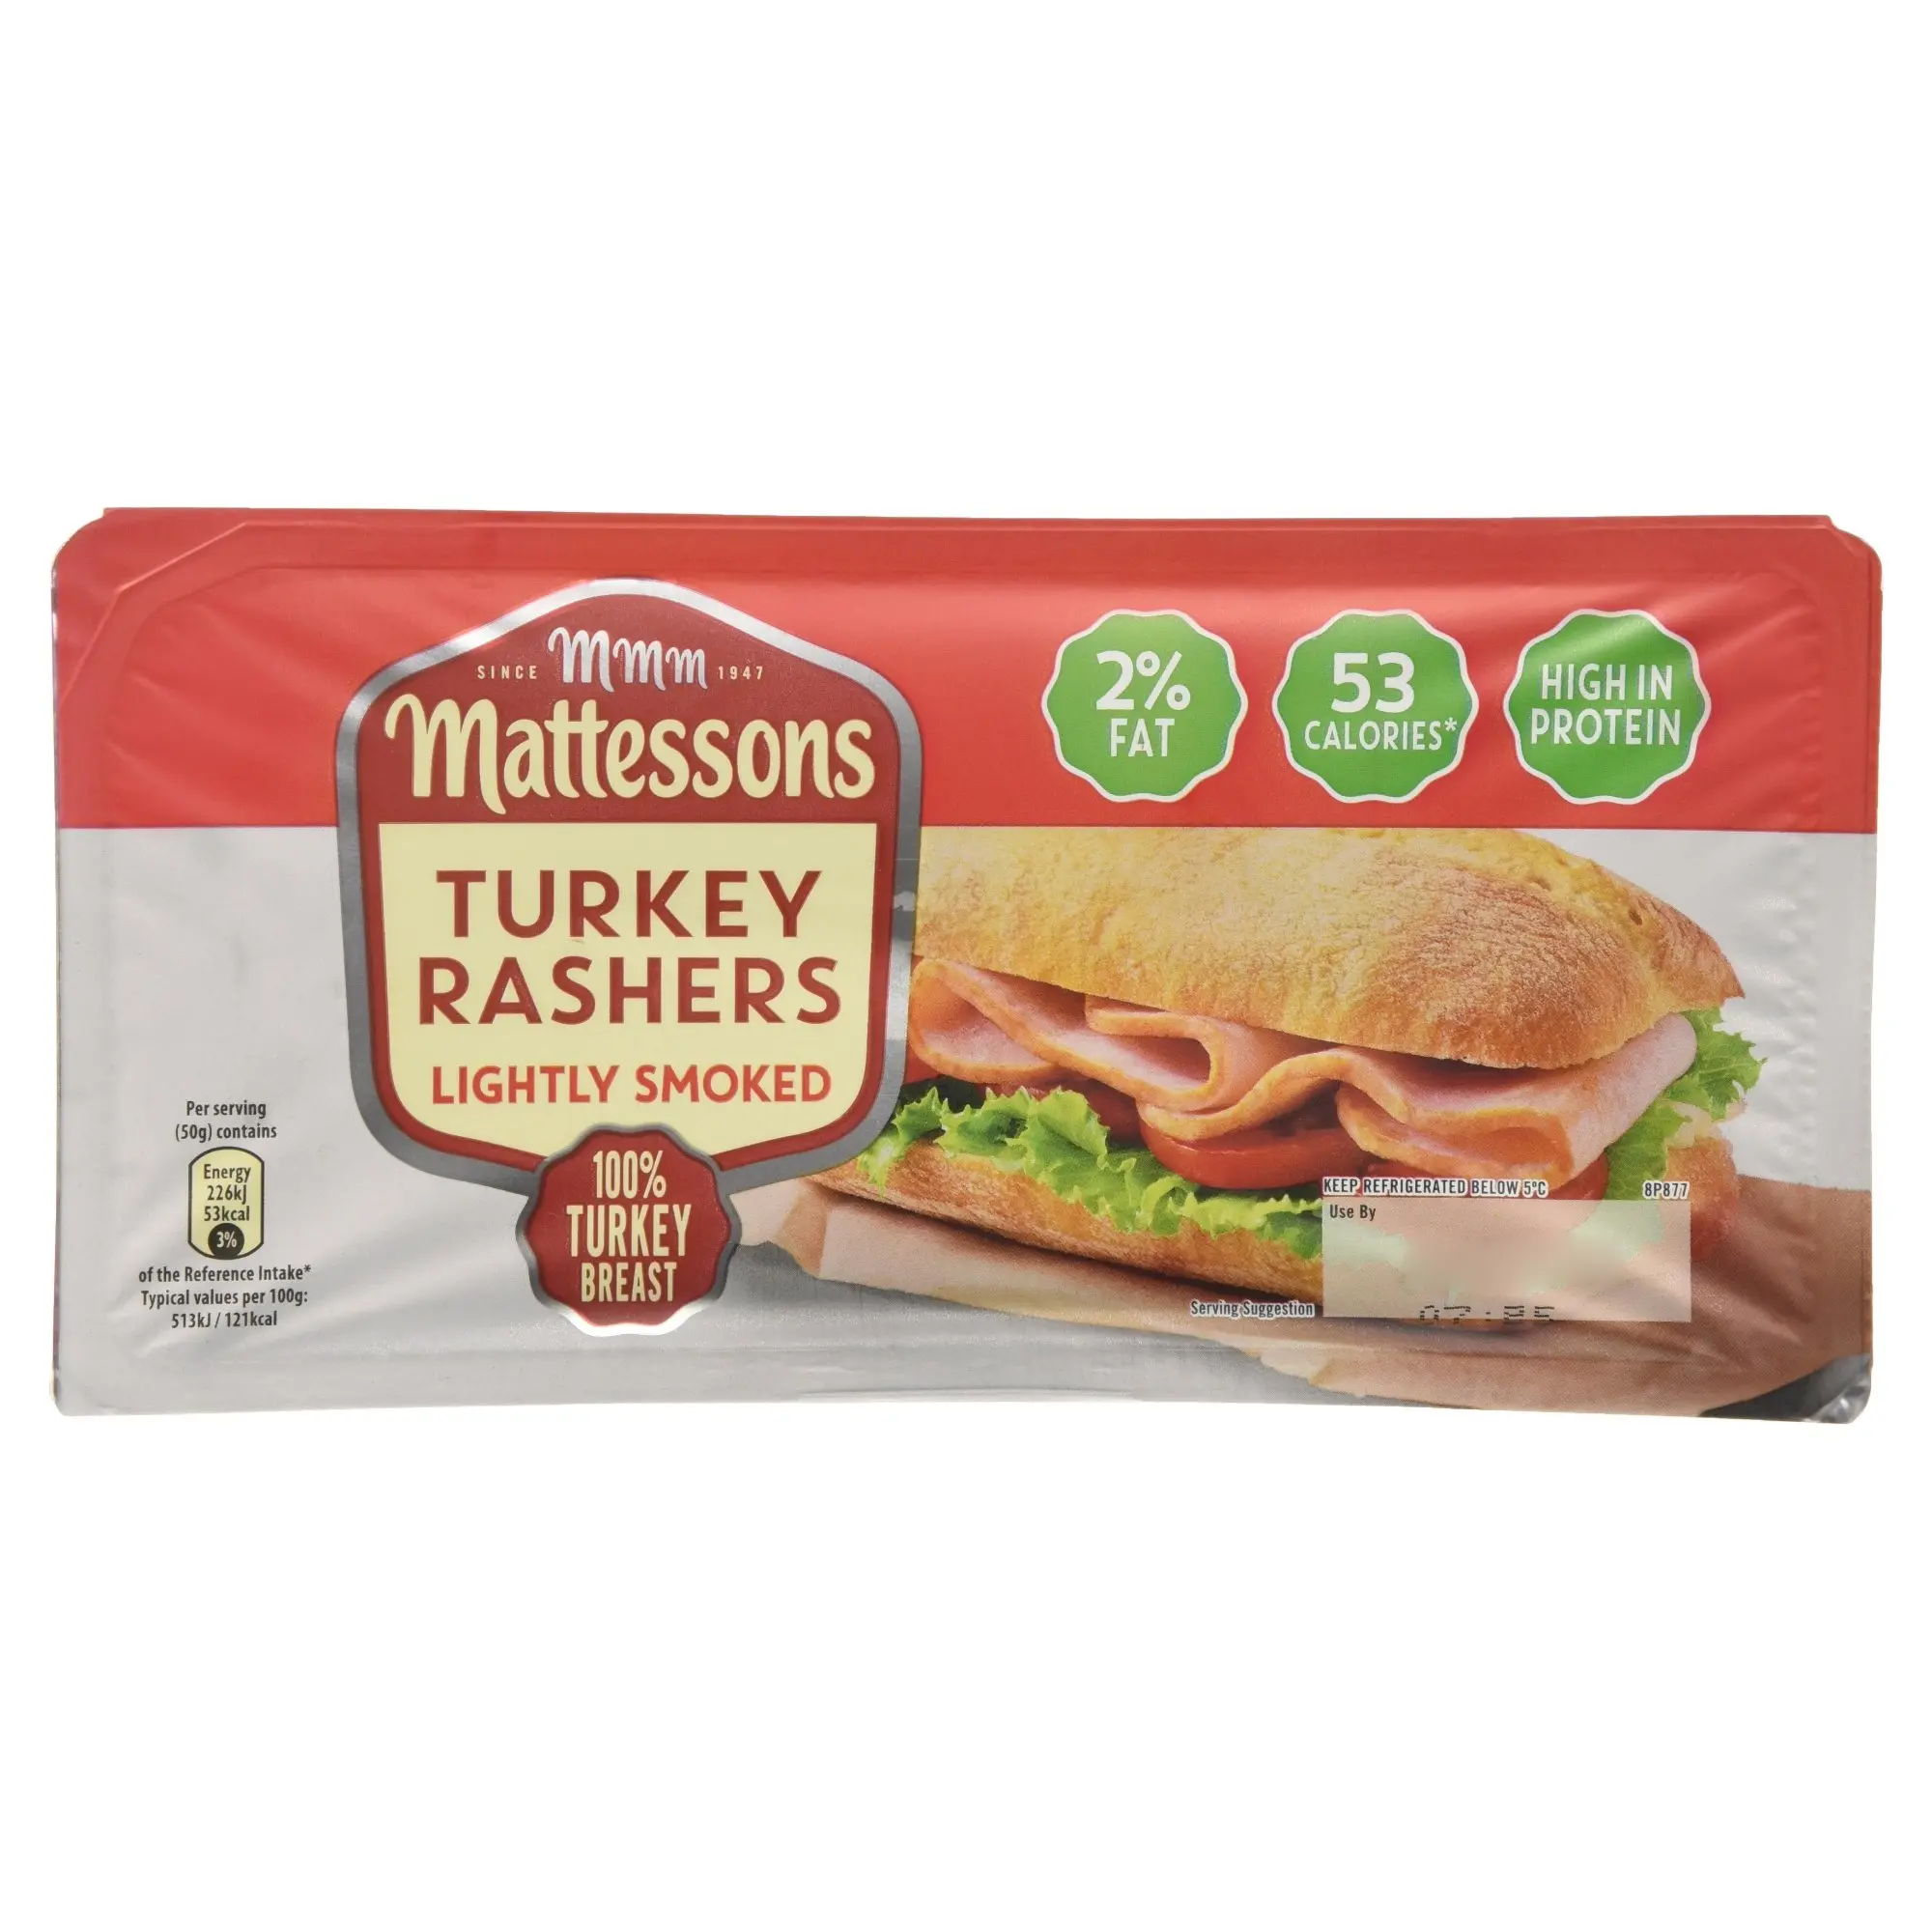 mattessons lightly smoked turkey rashers - How many calories are in Mattessons turkey rashers